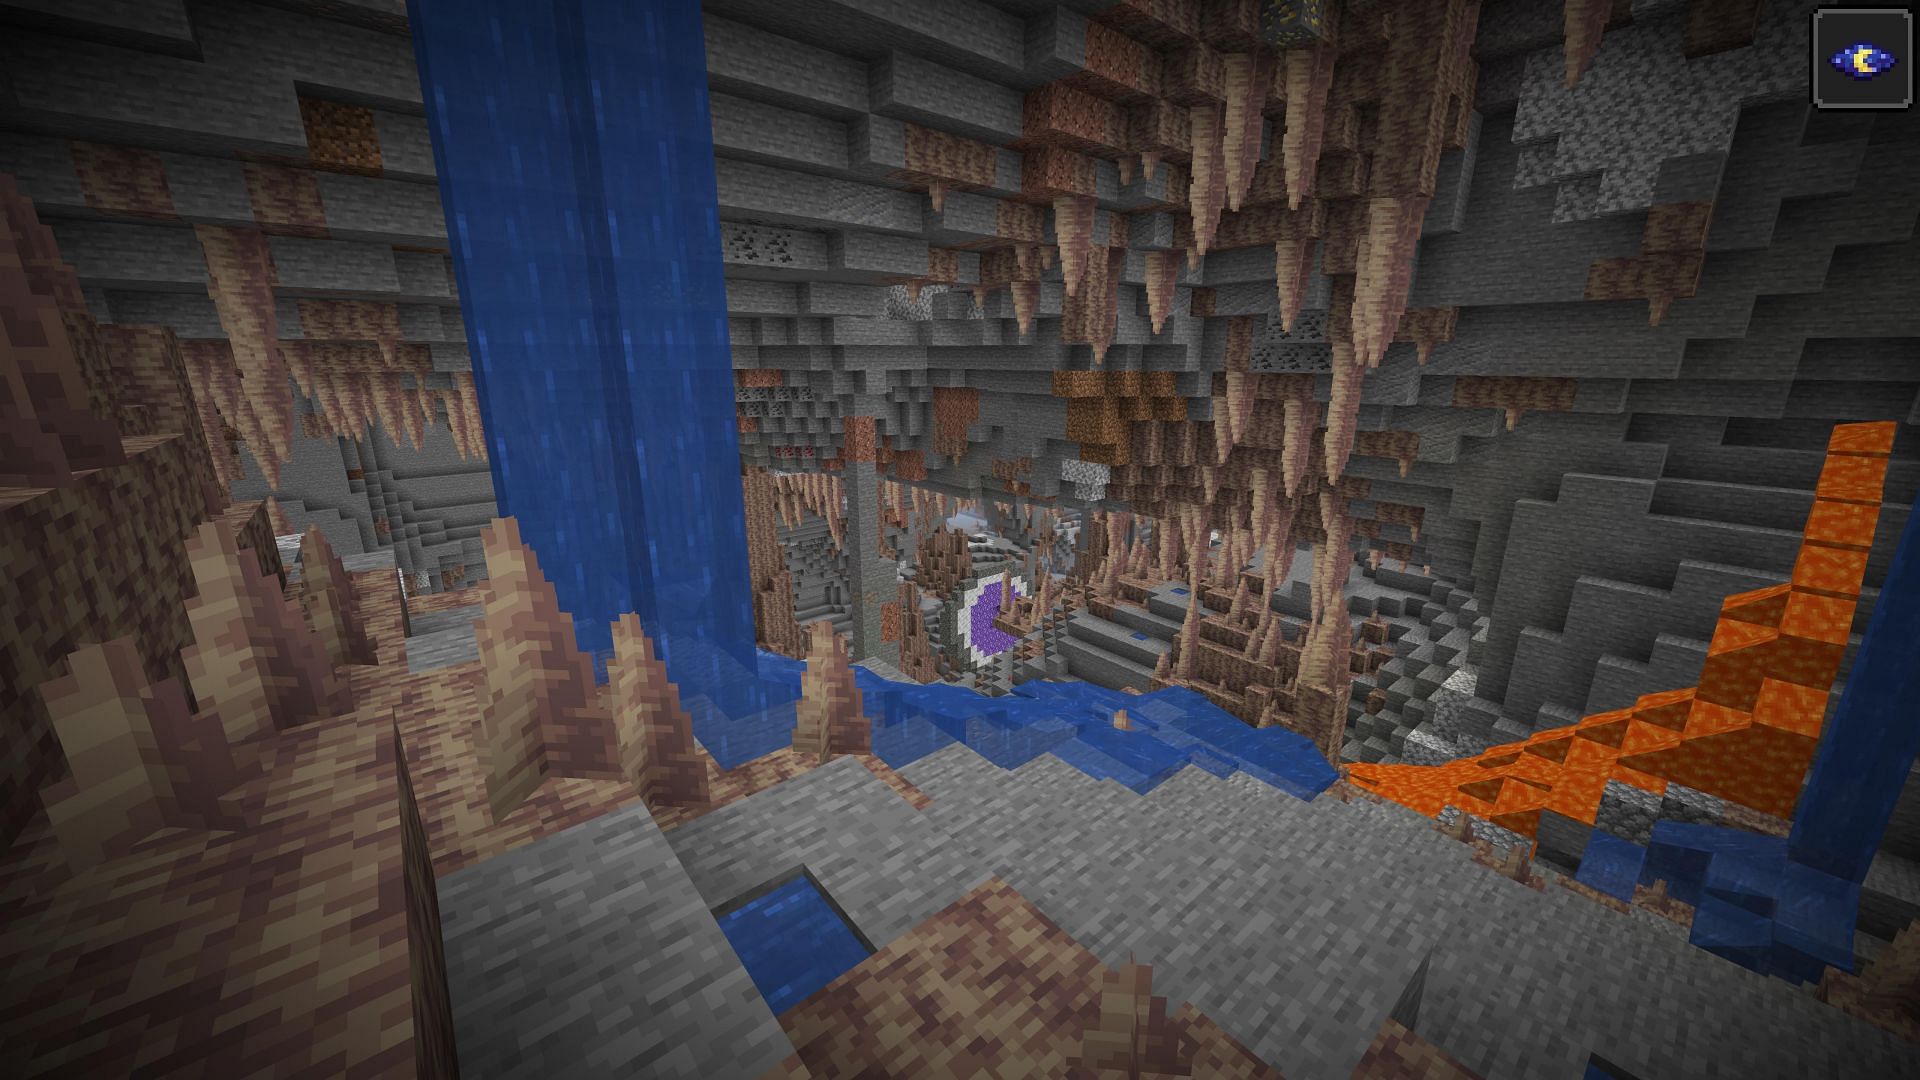 Dripstone Caves in Minecraft (Image via u/G2FT-G2funnythings, Reddit)